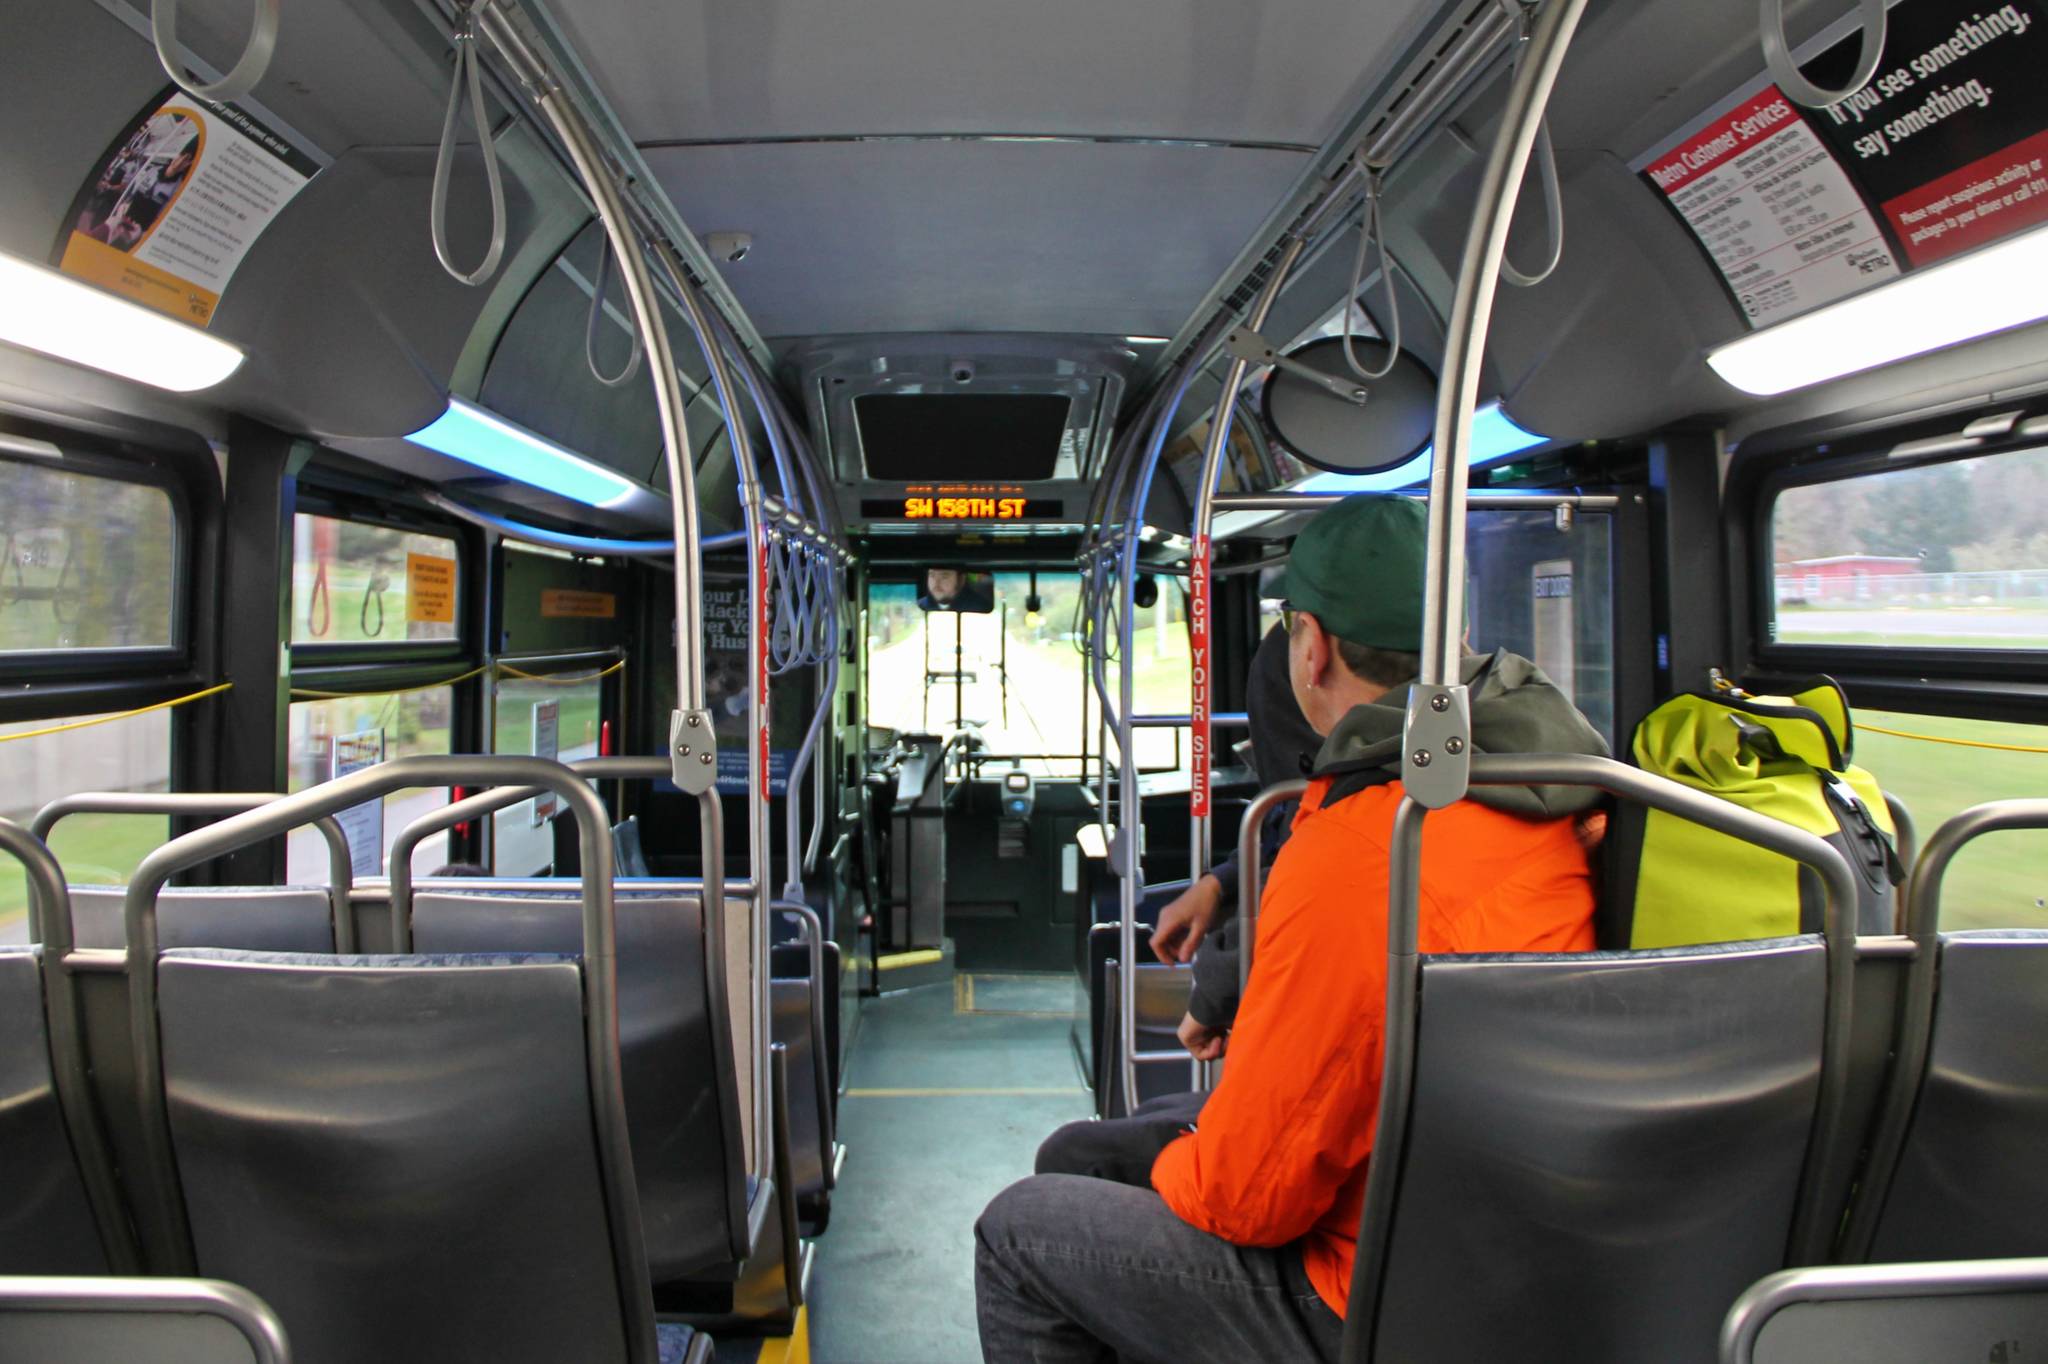 King County Metro to reduce bus service as ridership drops